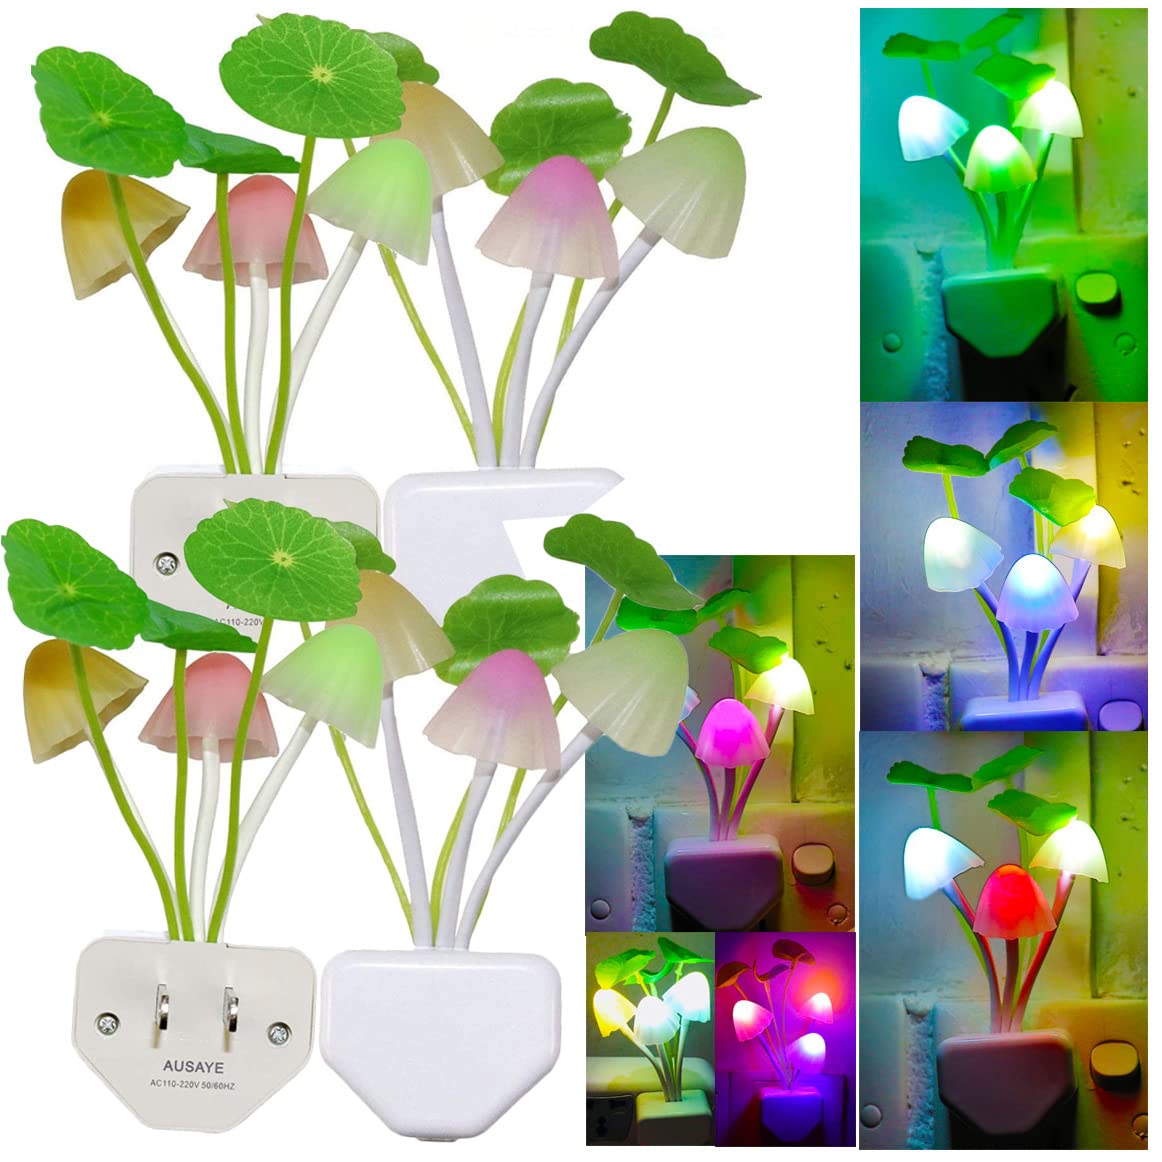 New LED Night Light Energy-saving Plug-in Induction Creative Mushroom Light For Home